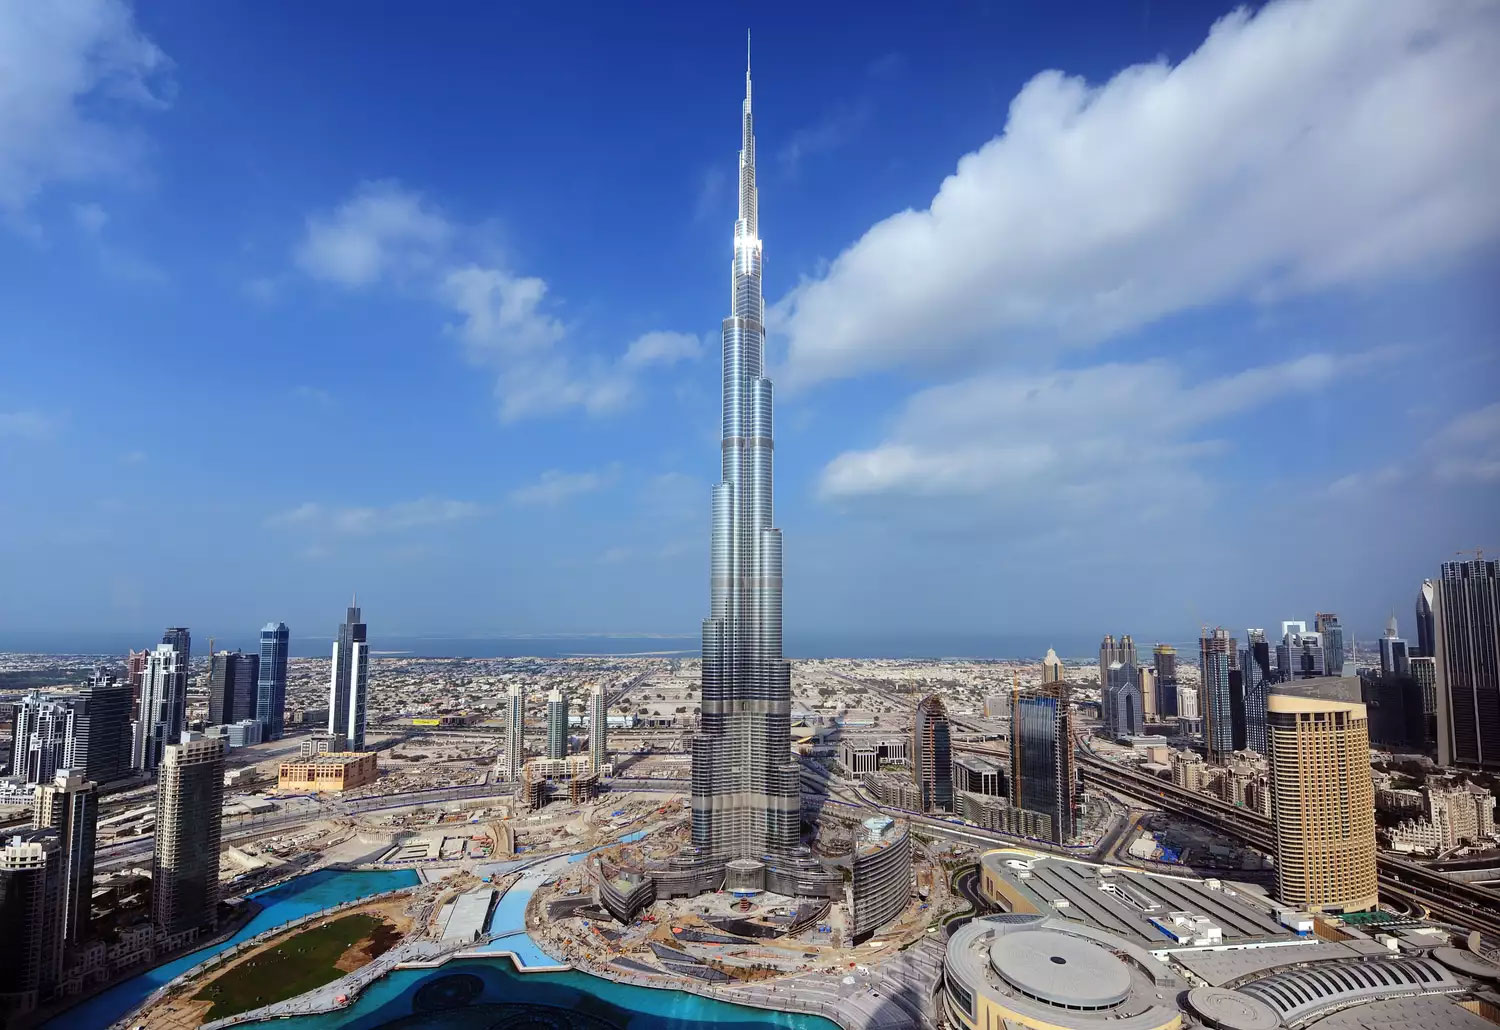 Saudi Arabia's $500 Billion Plan For World's Largest Buildings Ever